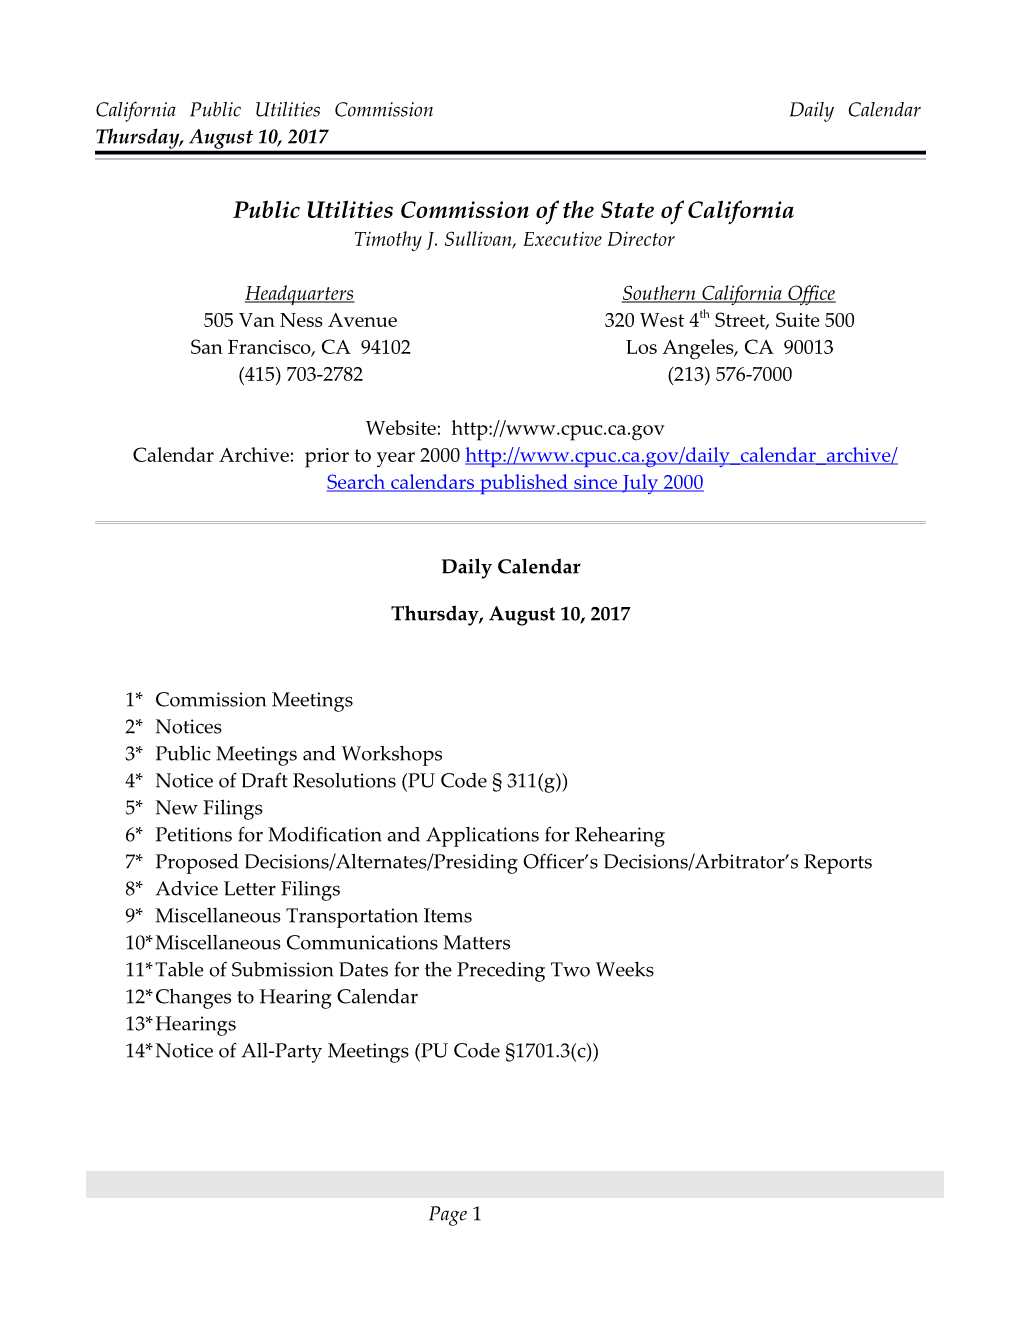 California Public Utilities Commission Daily Calendar Thursday, August 10, 2017